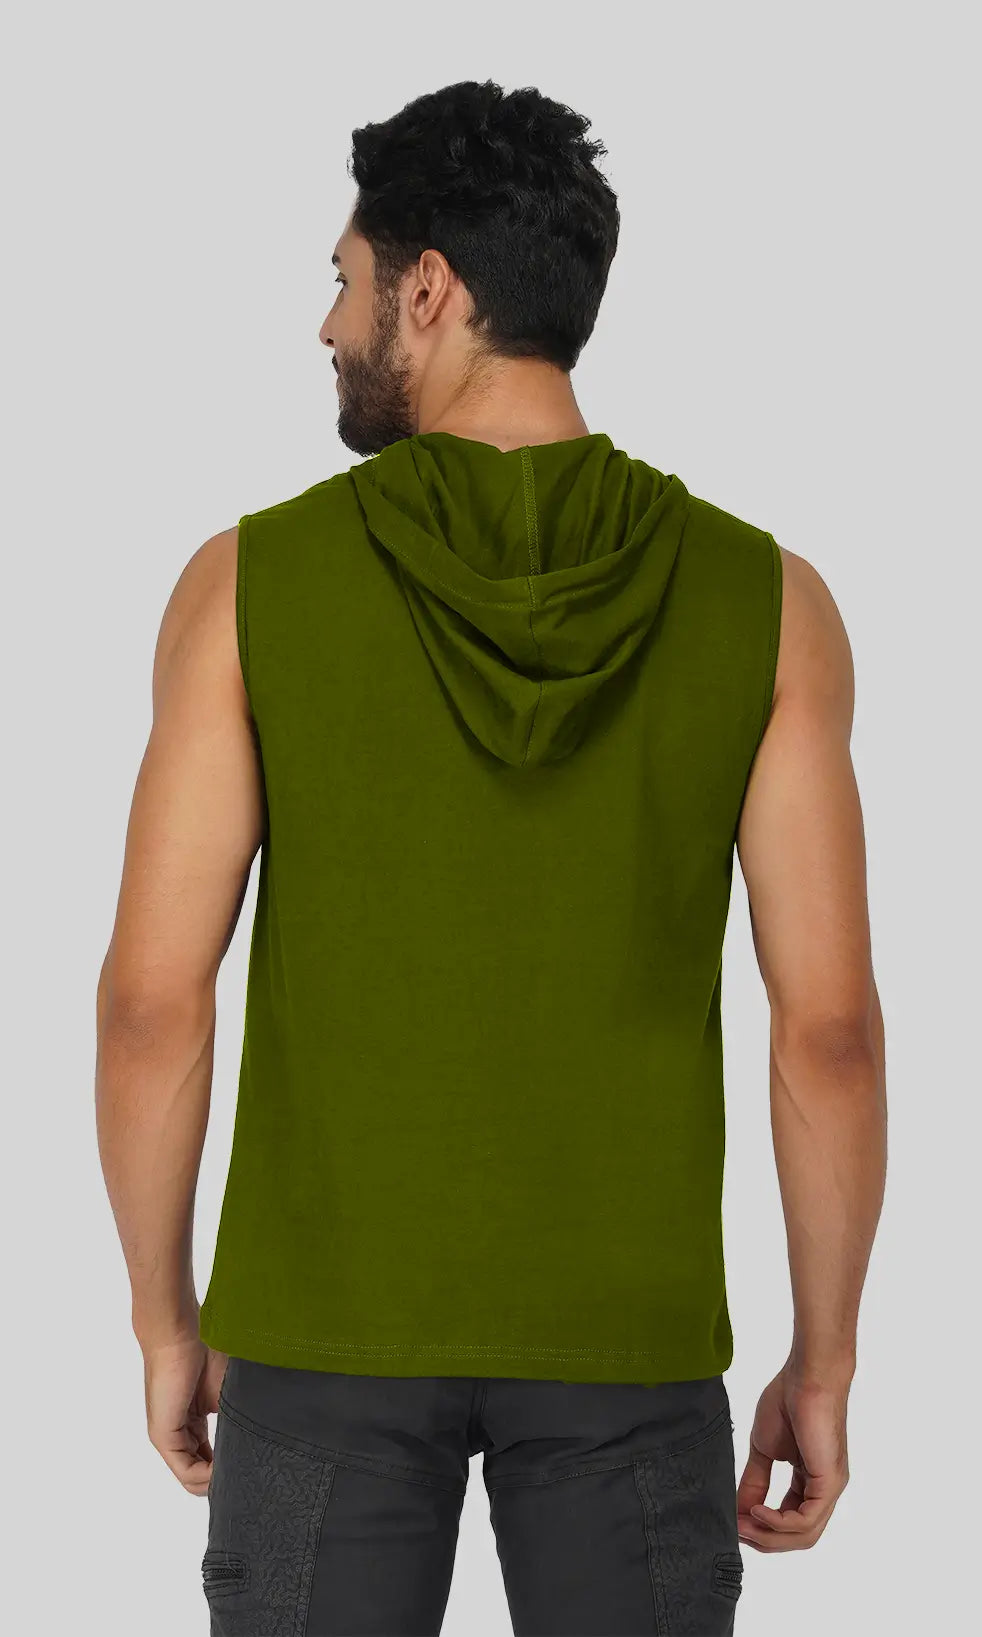 Mebadass Cotton Men's Sleeveless Vest with Hood- Olive Green